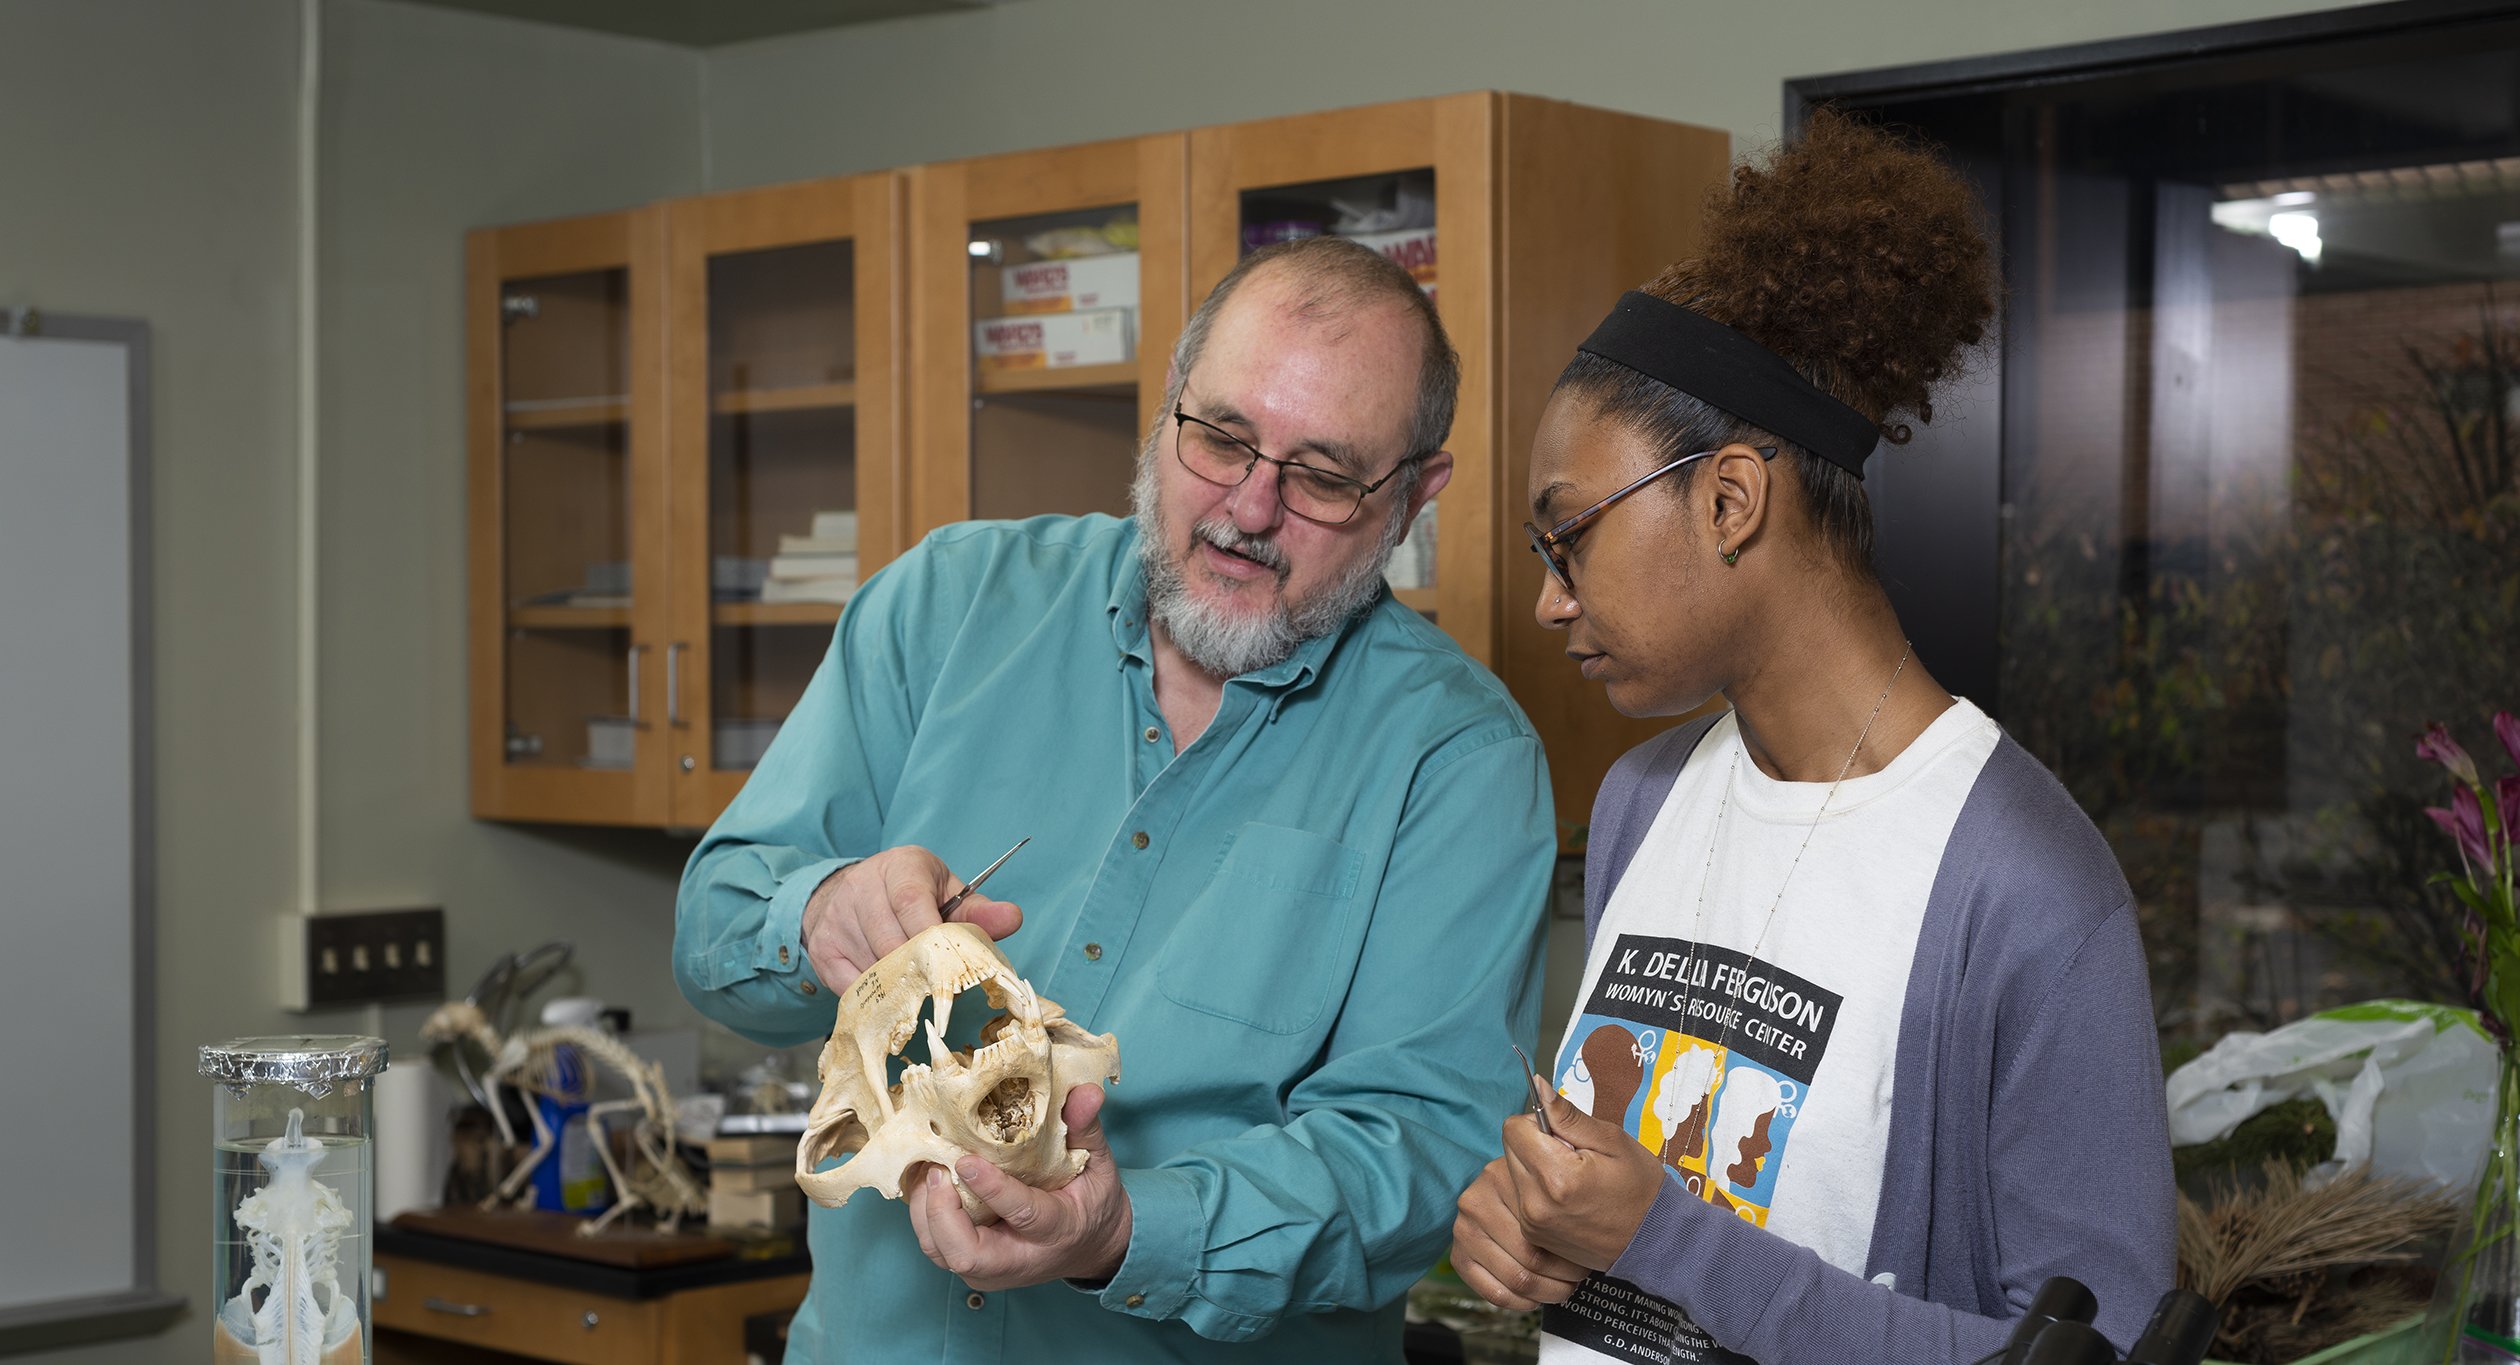 Dr. Buchanan and student observe a bear skull